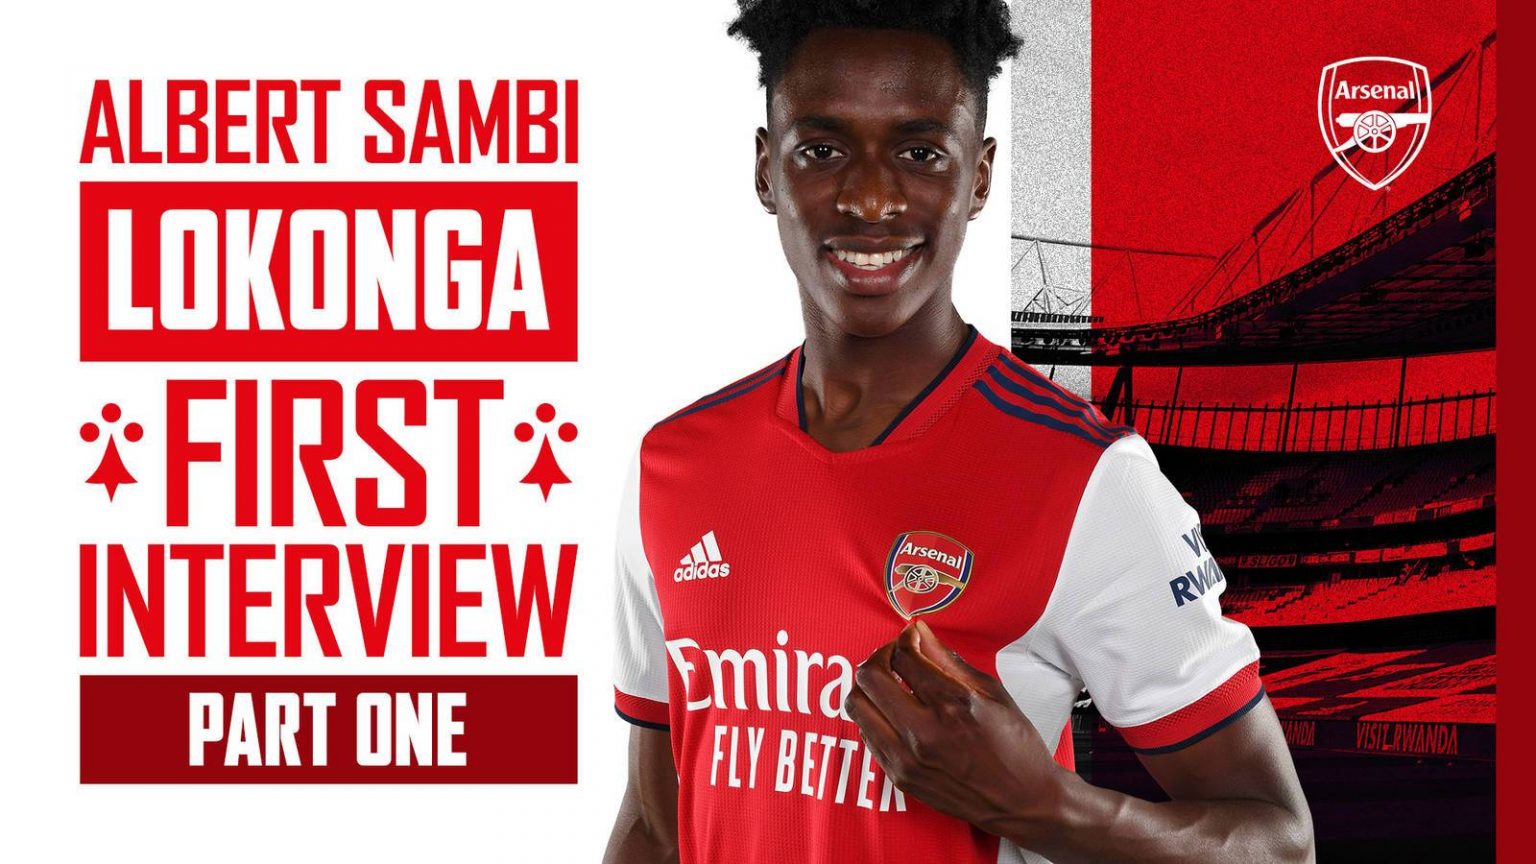 Arsenal sign Albert Sambi Lokonga - P.M. News